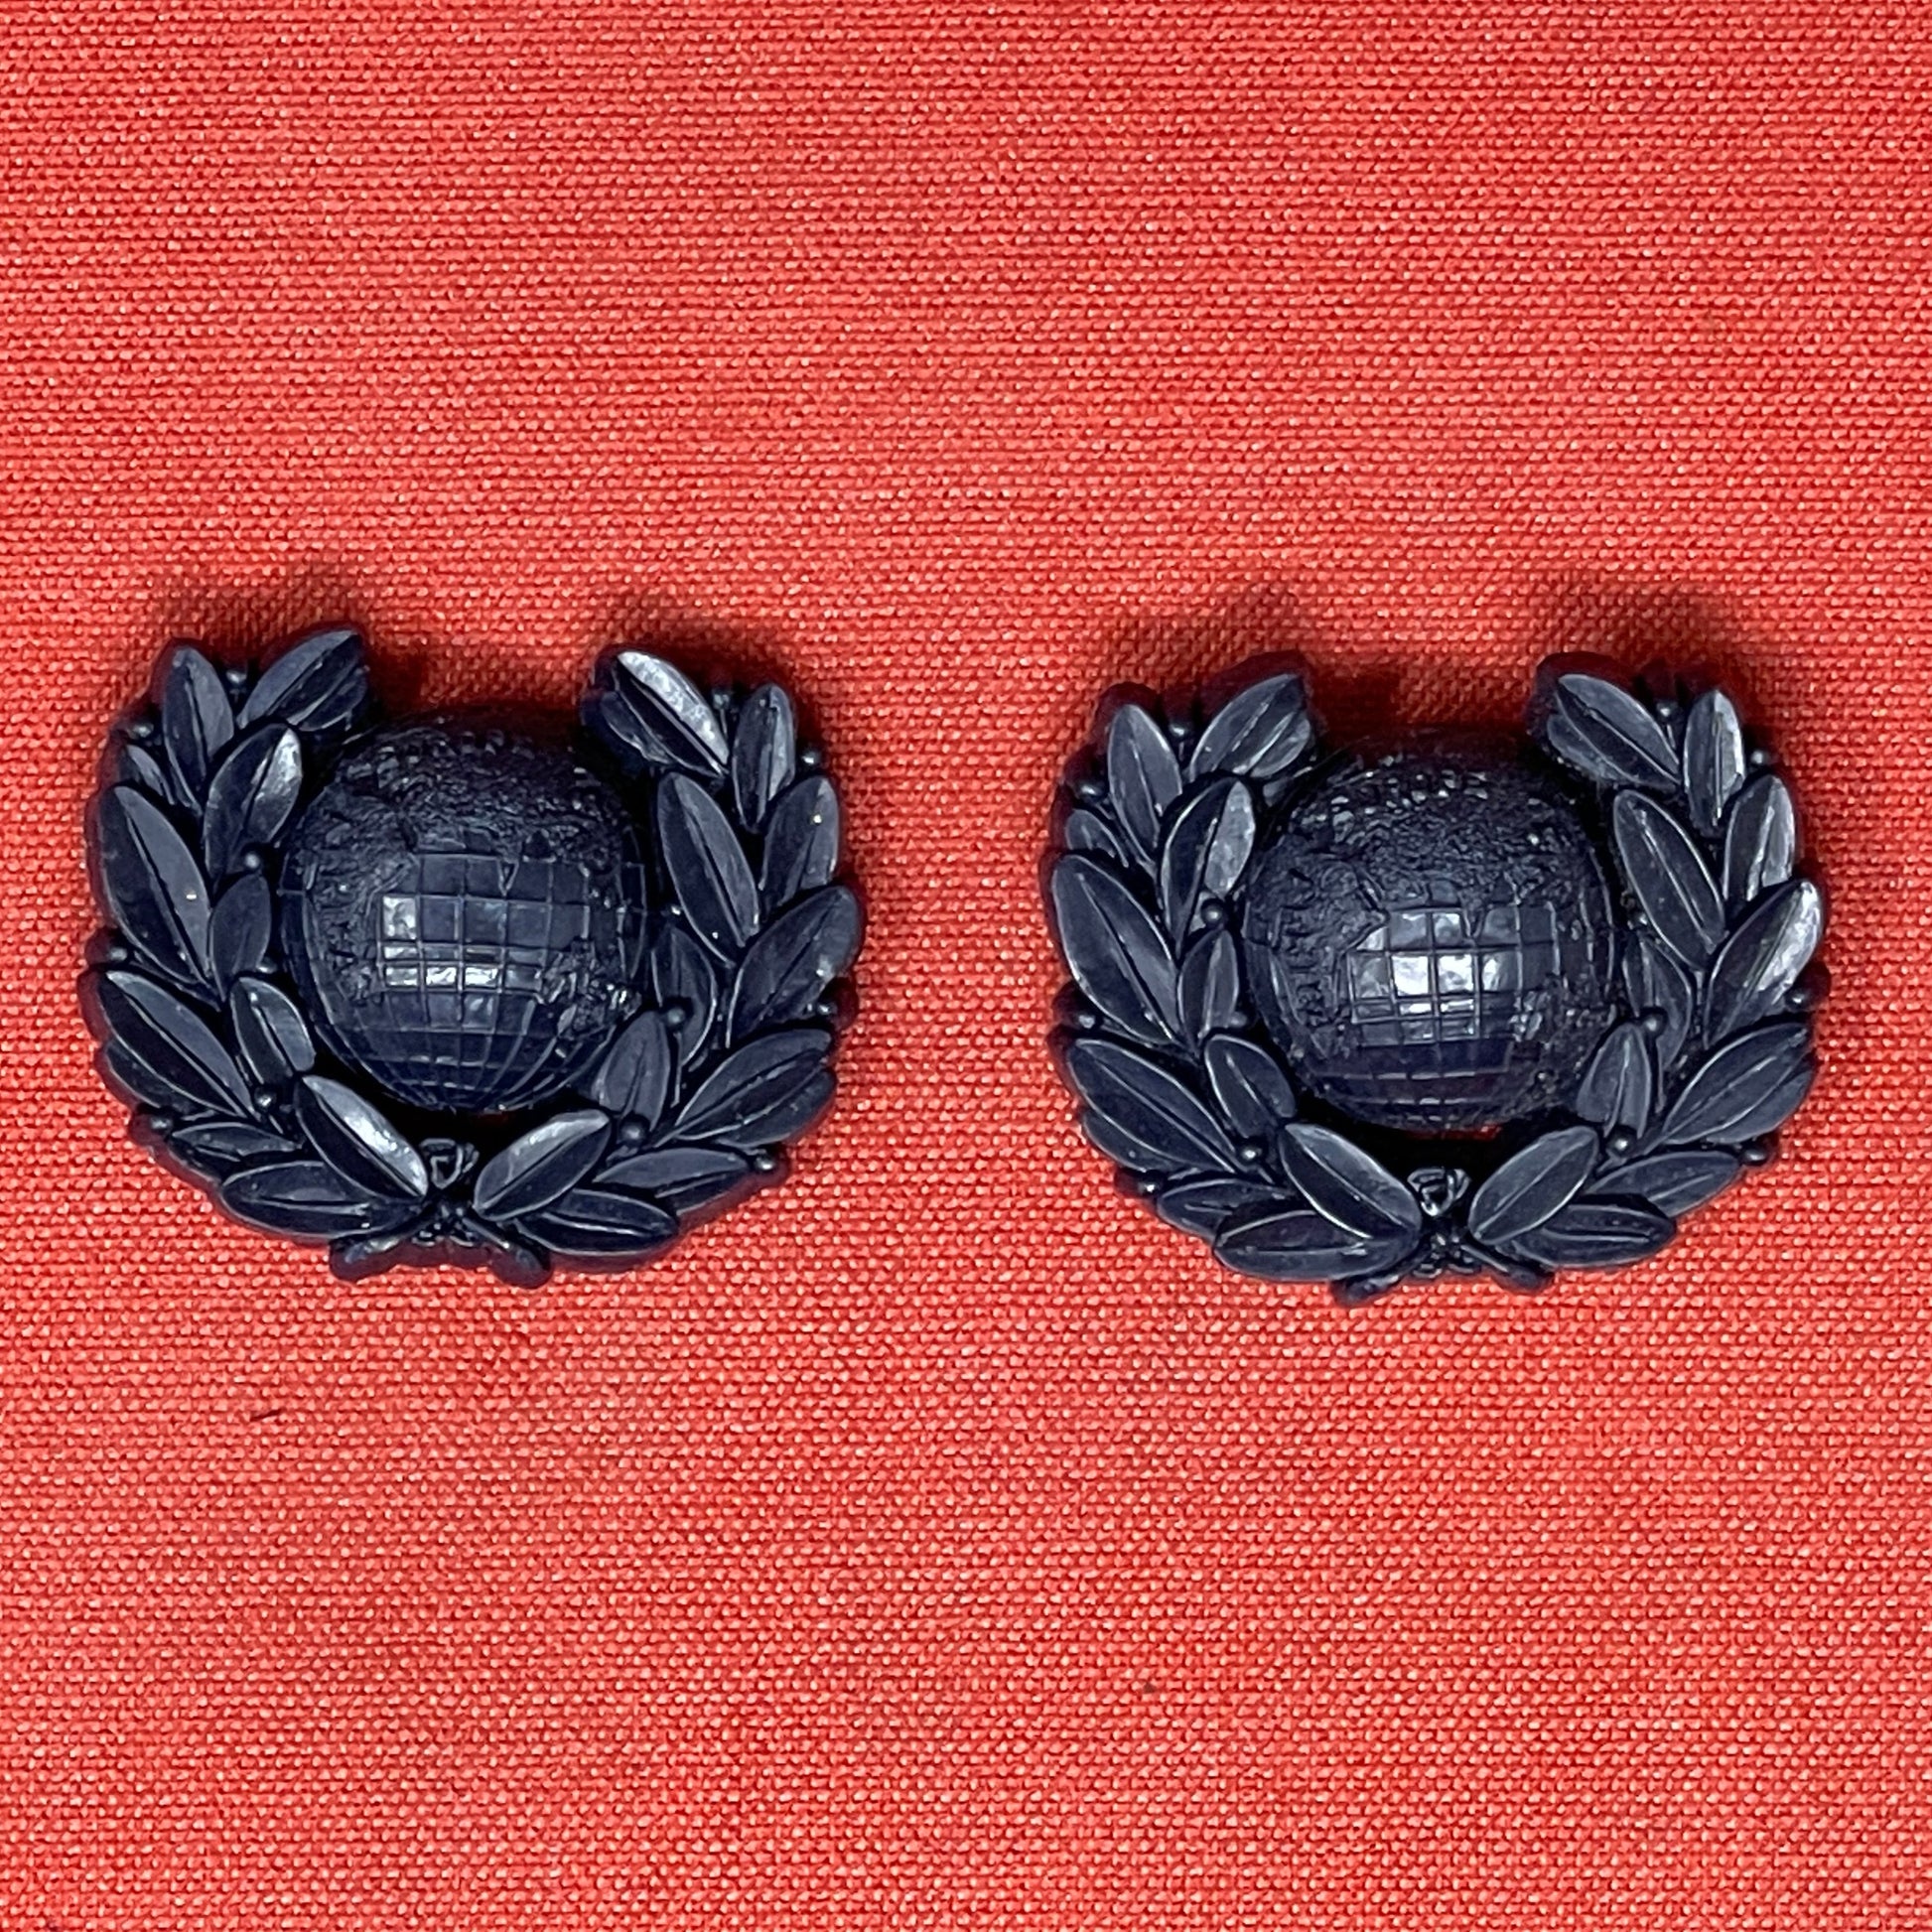 Pair of Royal Marine Plastic Economy Collar Badges